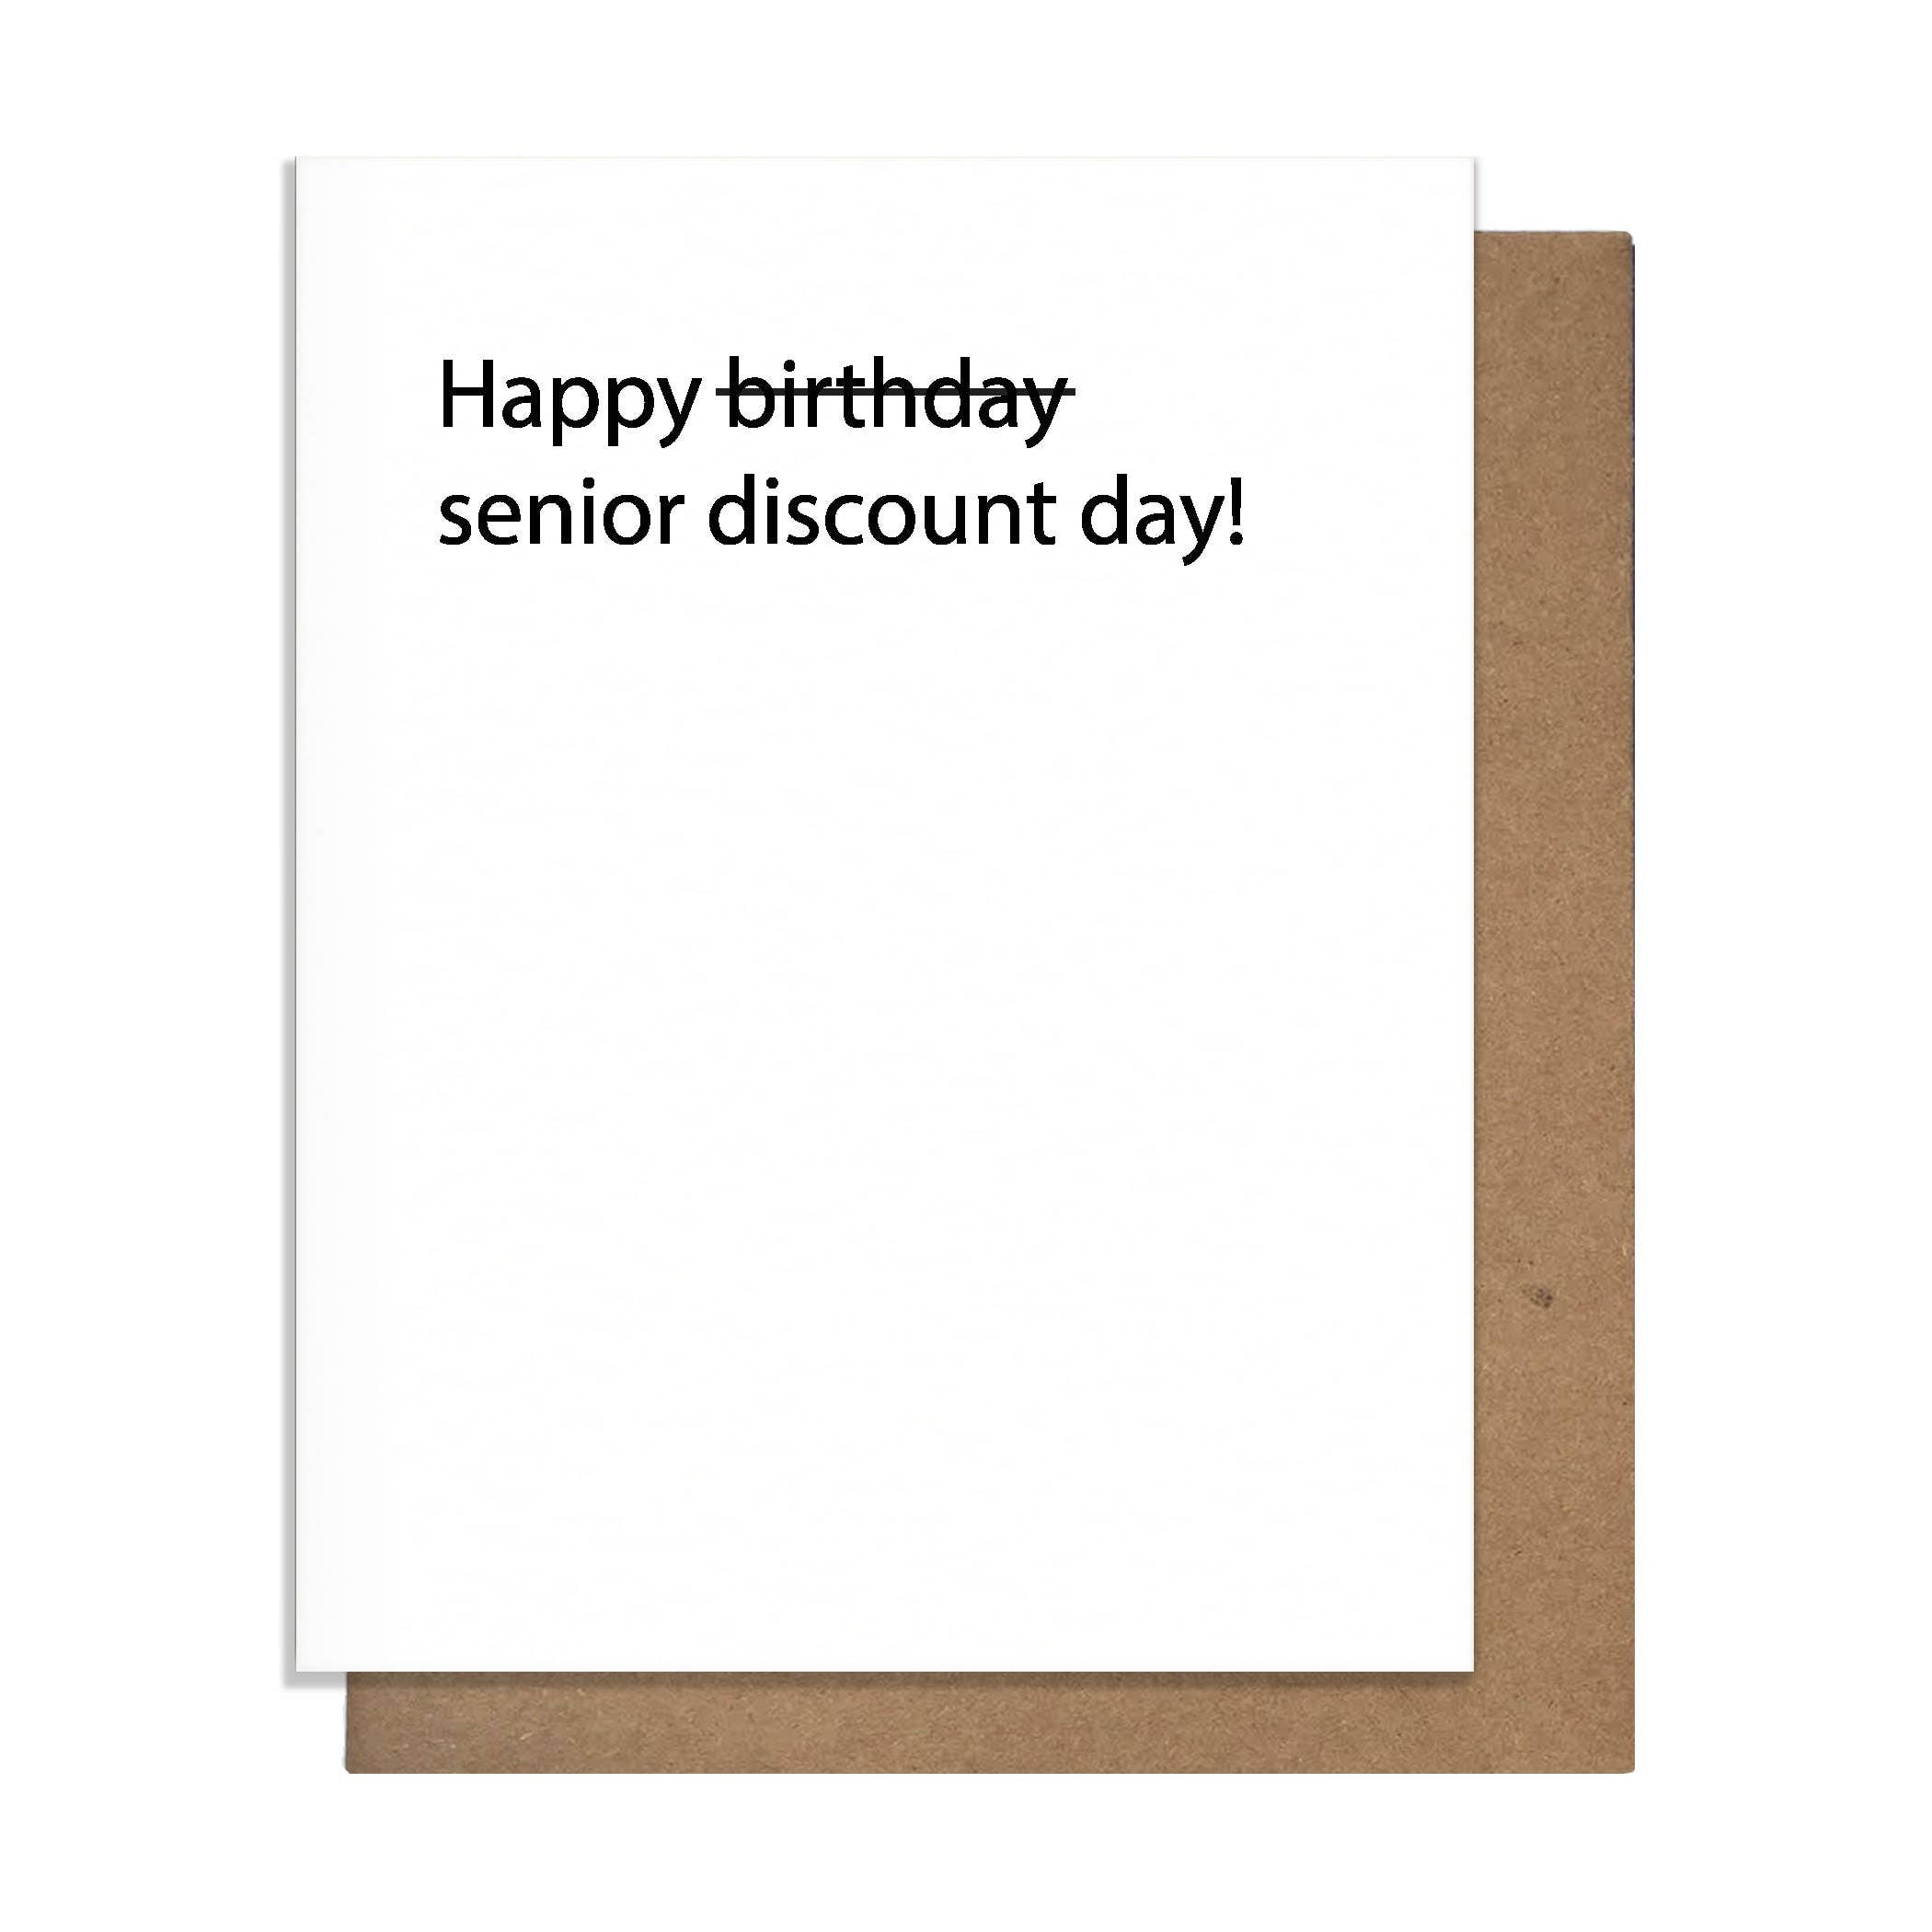 Pretty Alright Goods - Senior Discount - Birthday Card